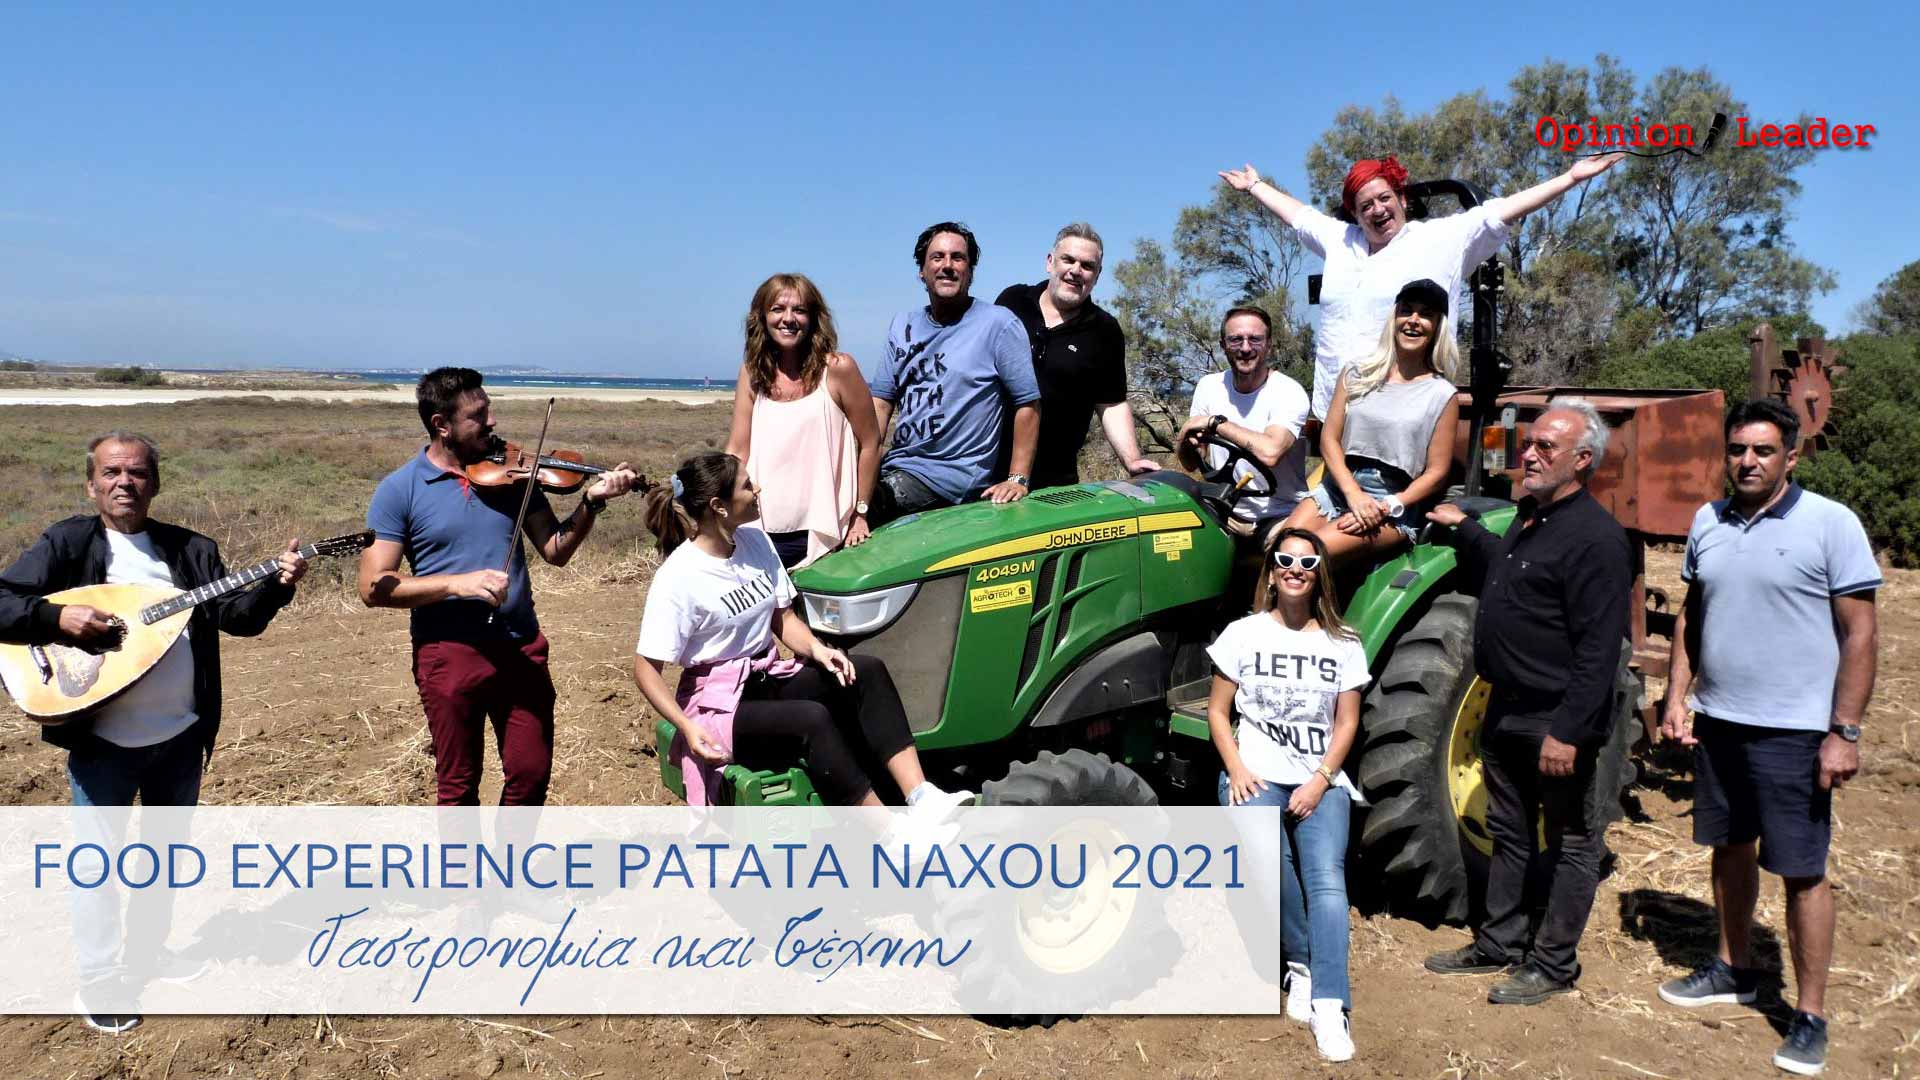 Food Experience Patata Naxou 2021